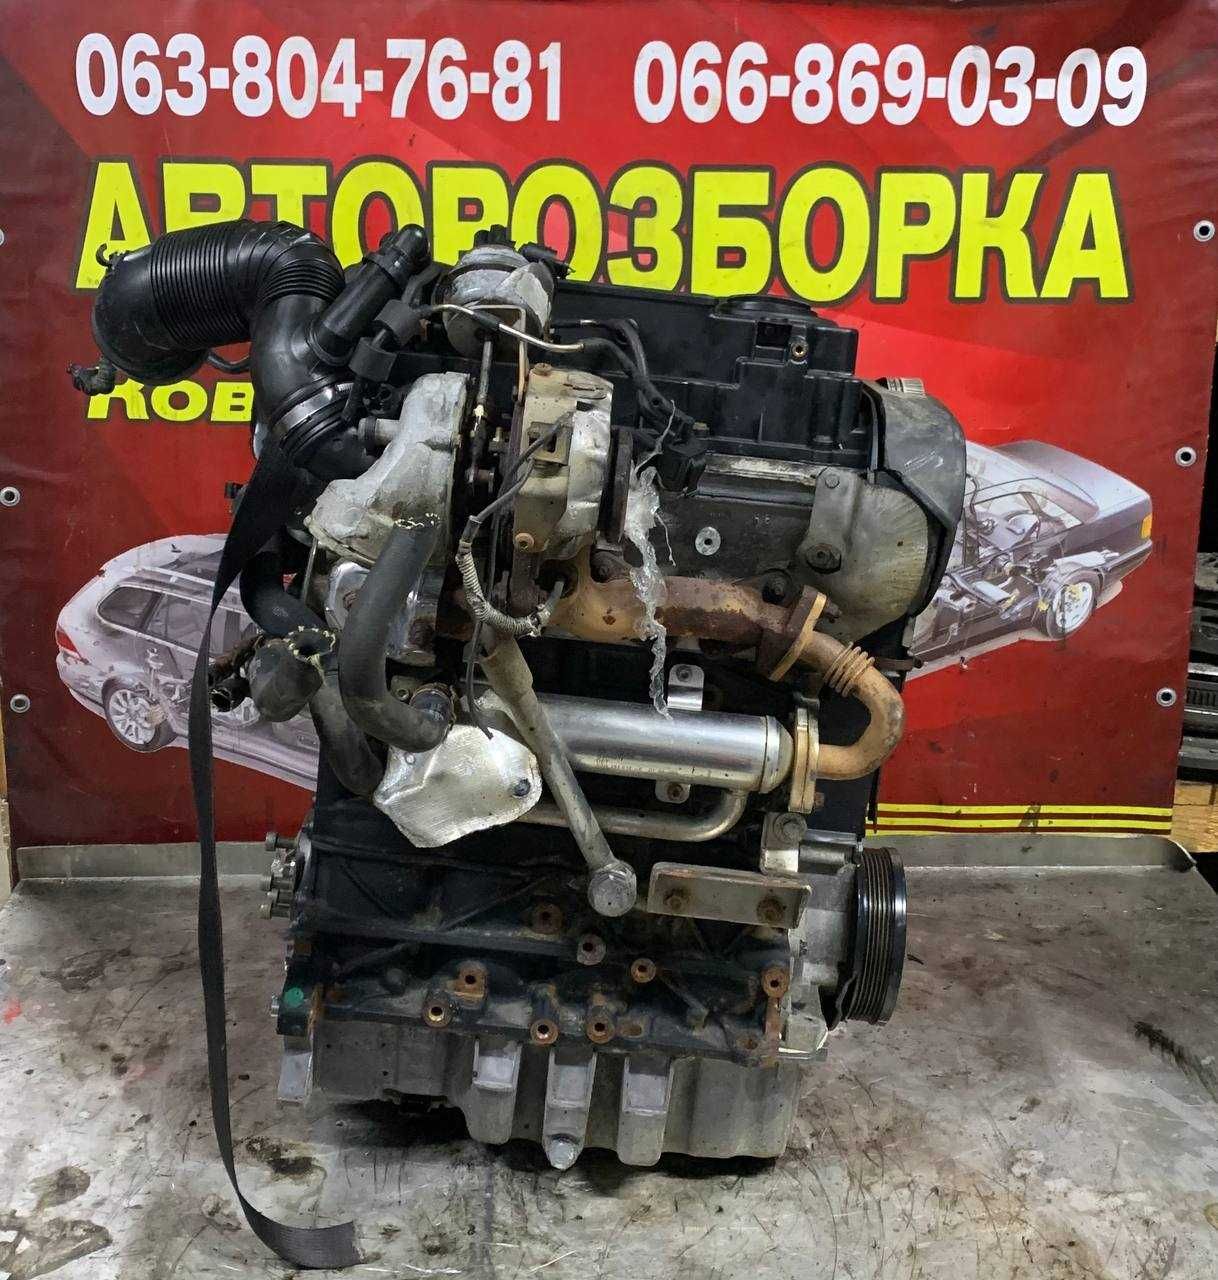 Двигун Мотор Двігатель Volkswagen Passat B6, Golf 5 2.0 tdi 125 kw